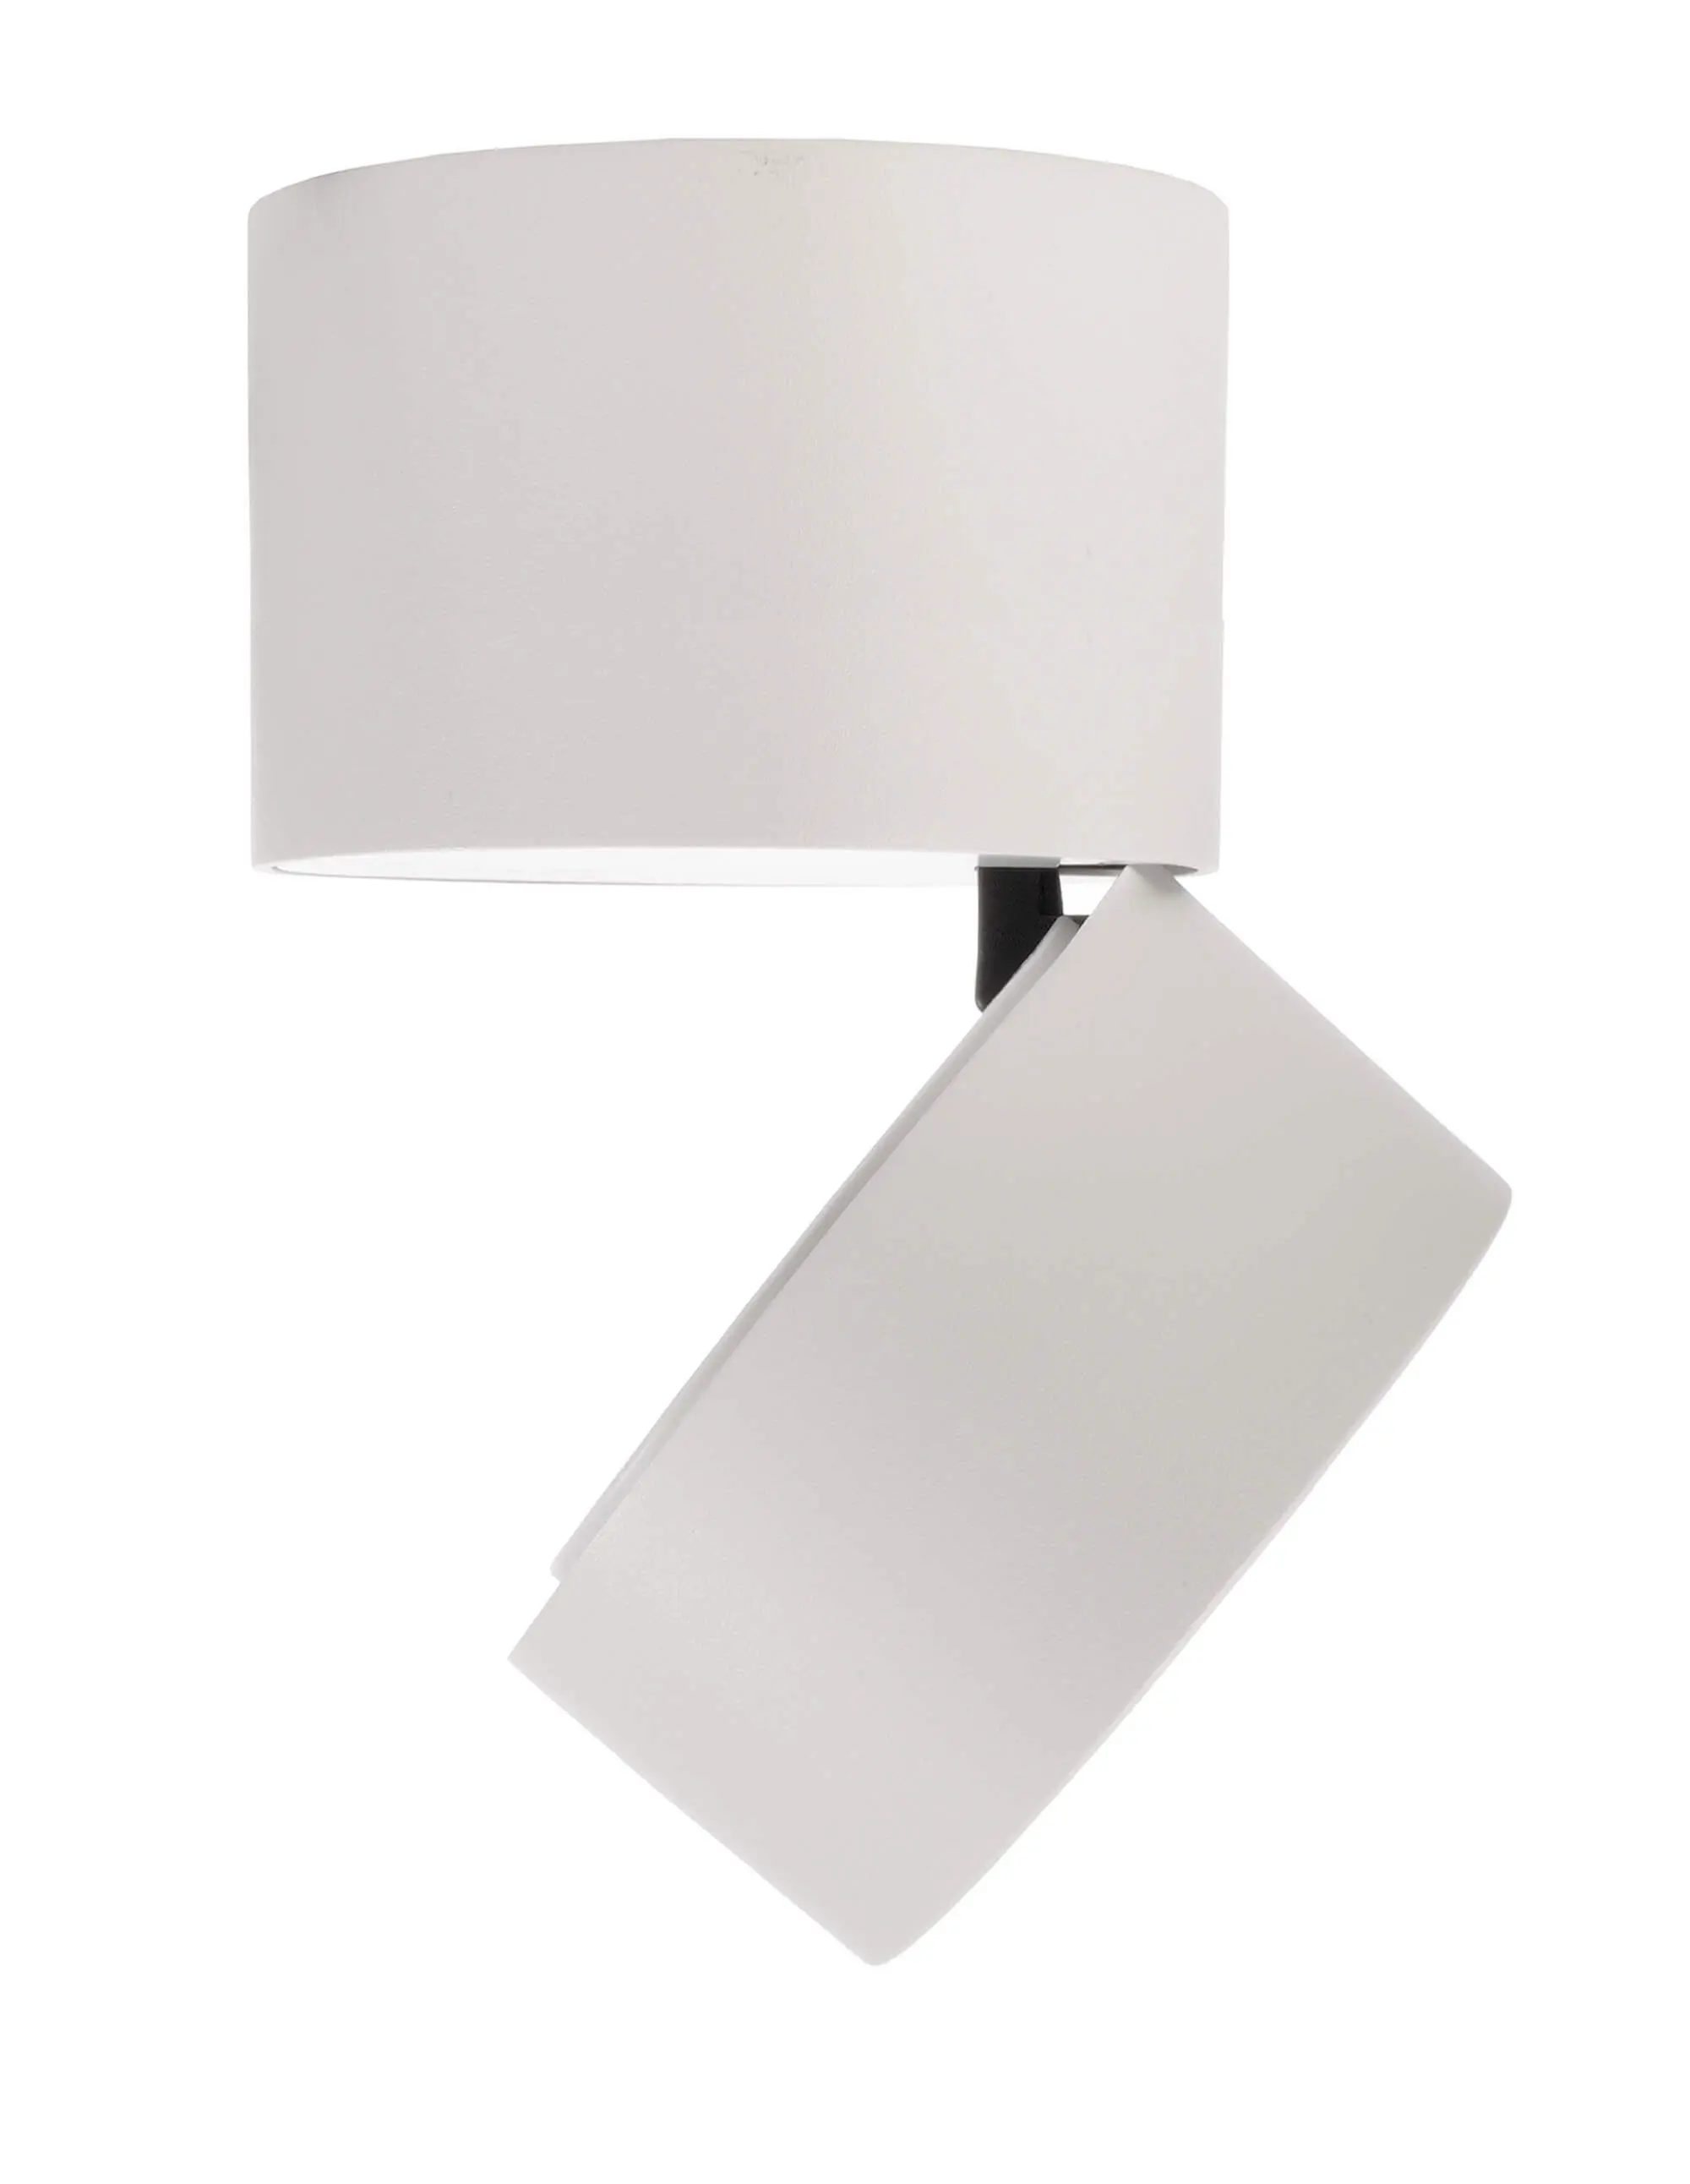 LED-Deckenlampe Uni II Mini weiß dimmbar 11.3W 2700K